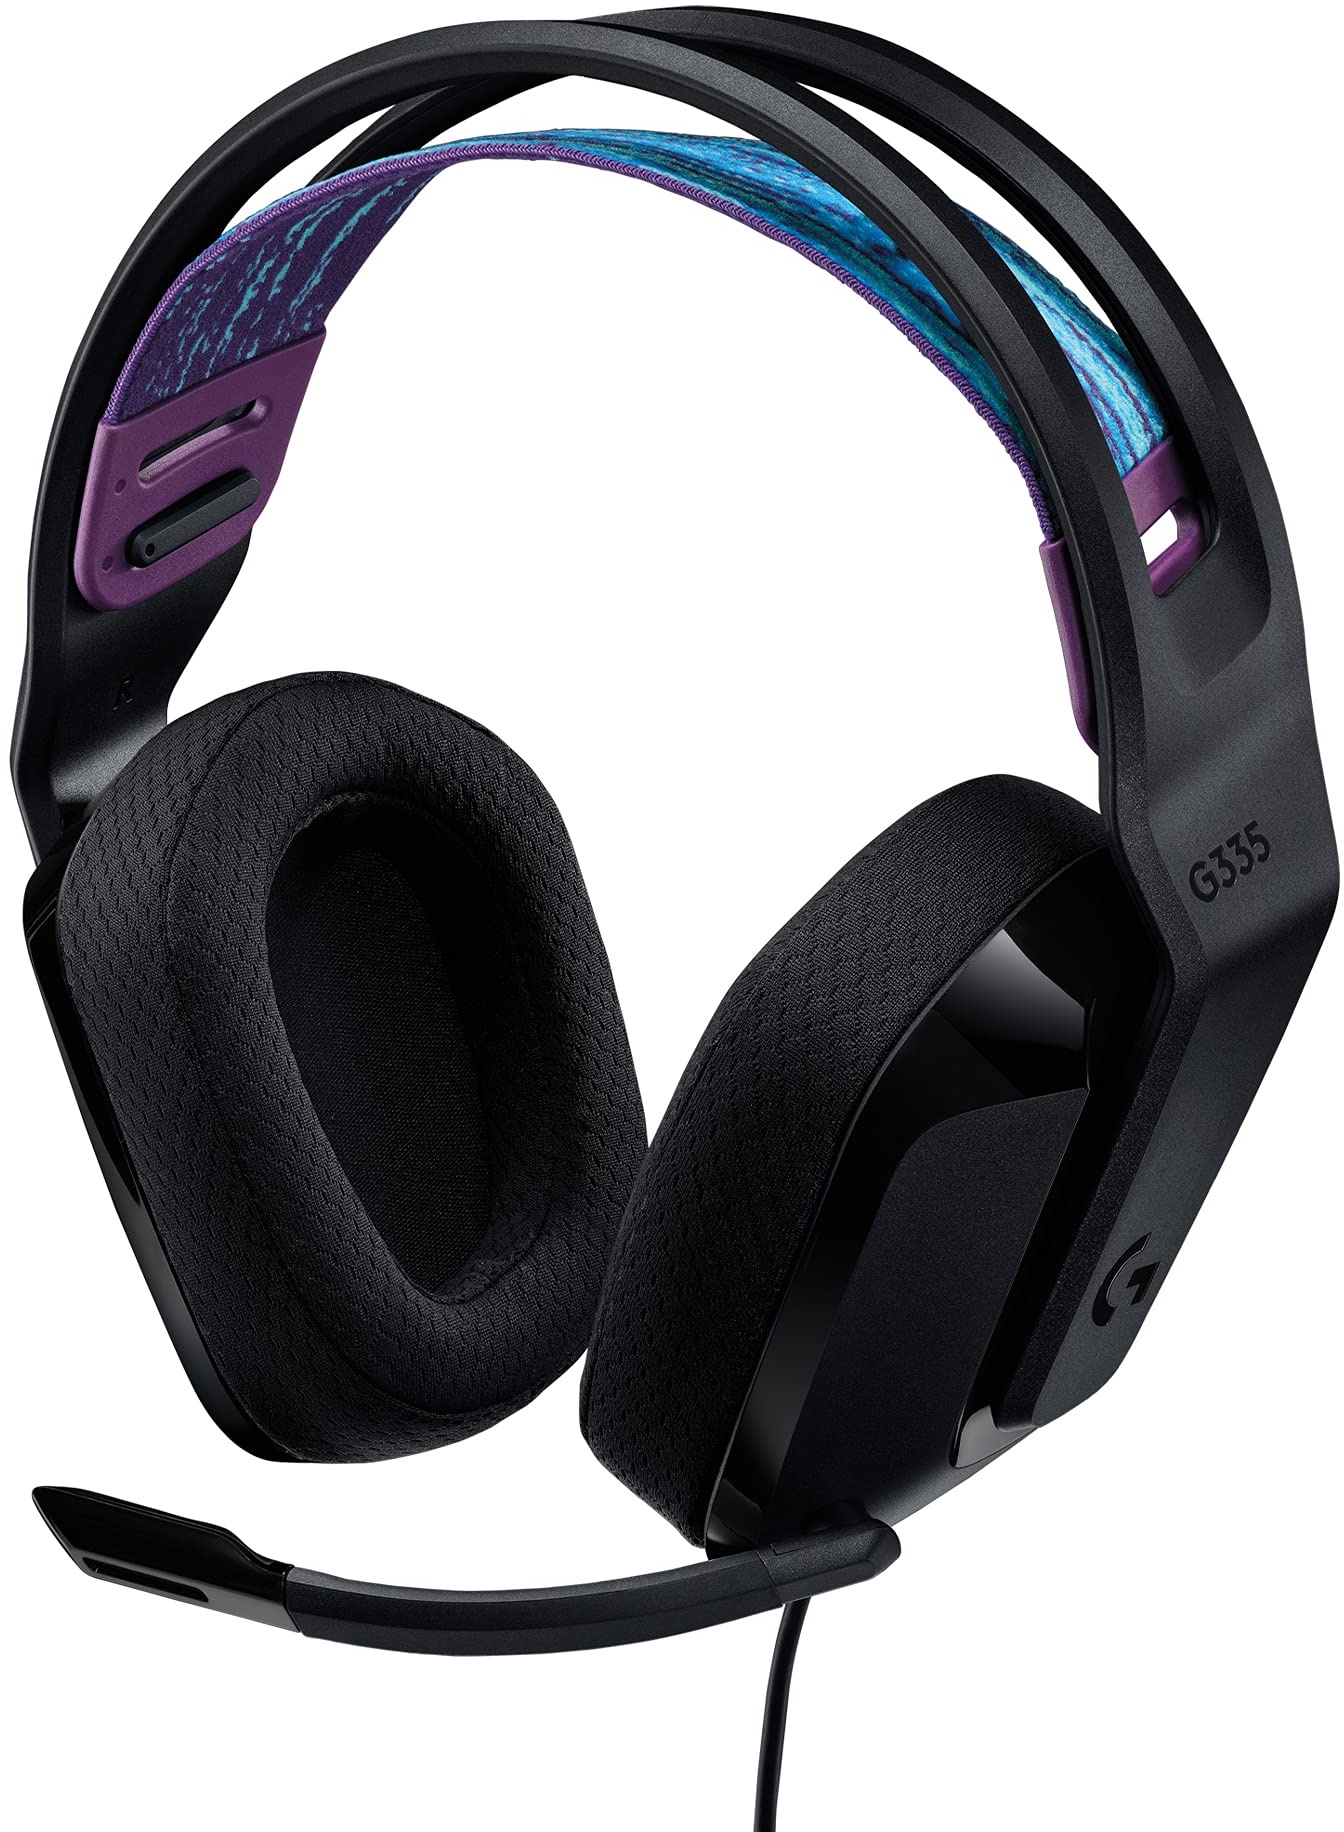 Logitech G335 Kabelgebundenes Gaming-Headset, Flip-to-Mute-Mikrofon, 3,5 mm Audioanschluss, Memory-Schaum-Ohrpolster, Leicht, Kompatibel mit PC, PlayStation, Xbox, Nintendo Switch - Schwarz